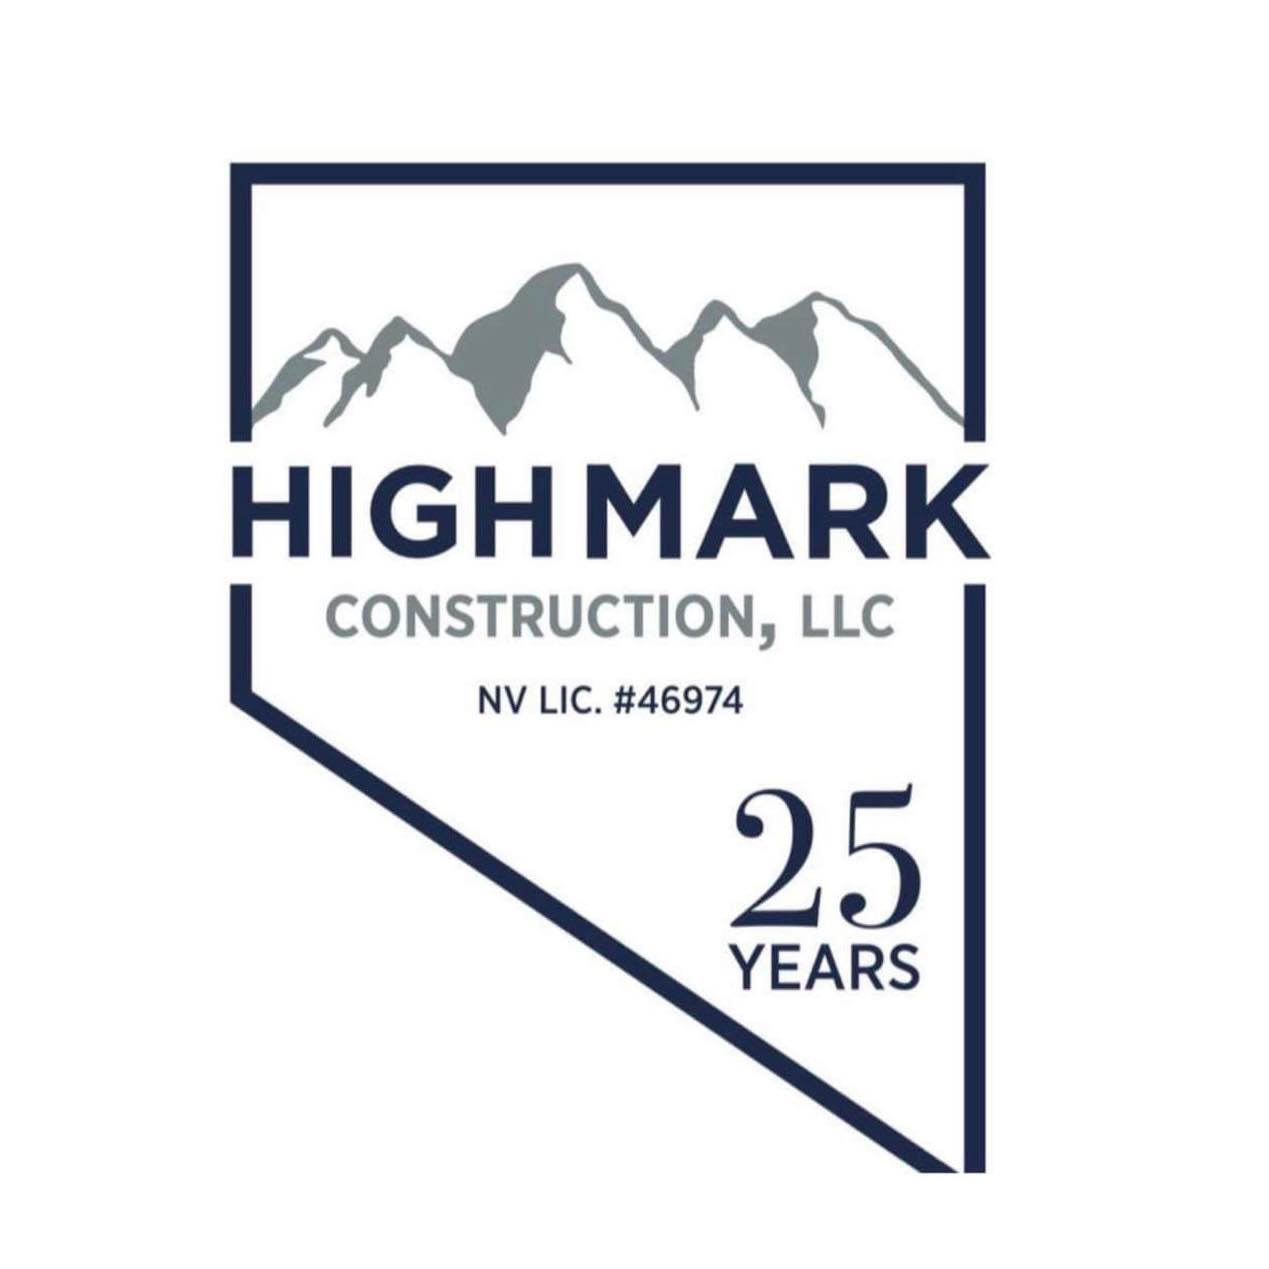 HIGH MARK CONSTRUCTION